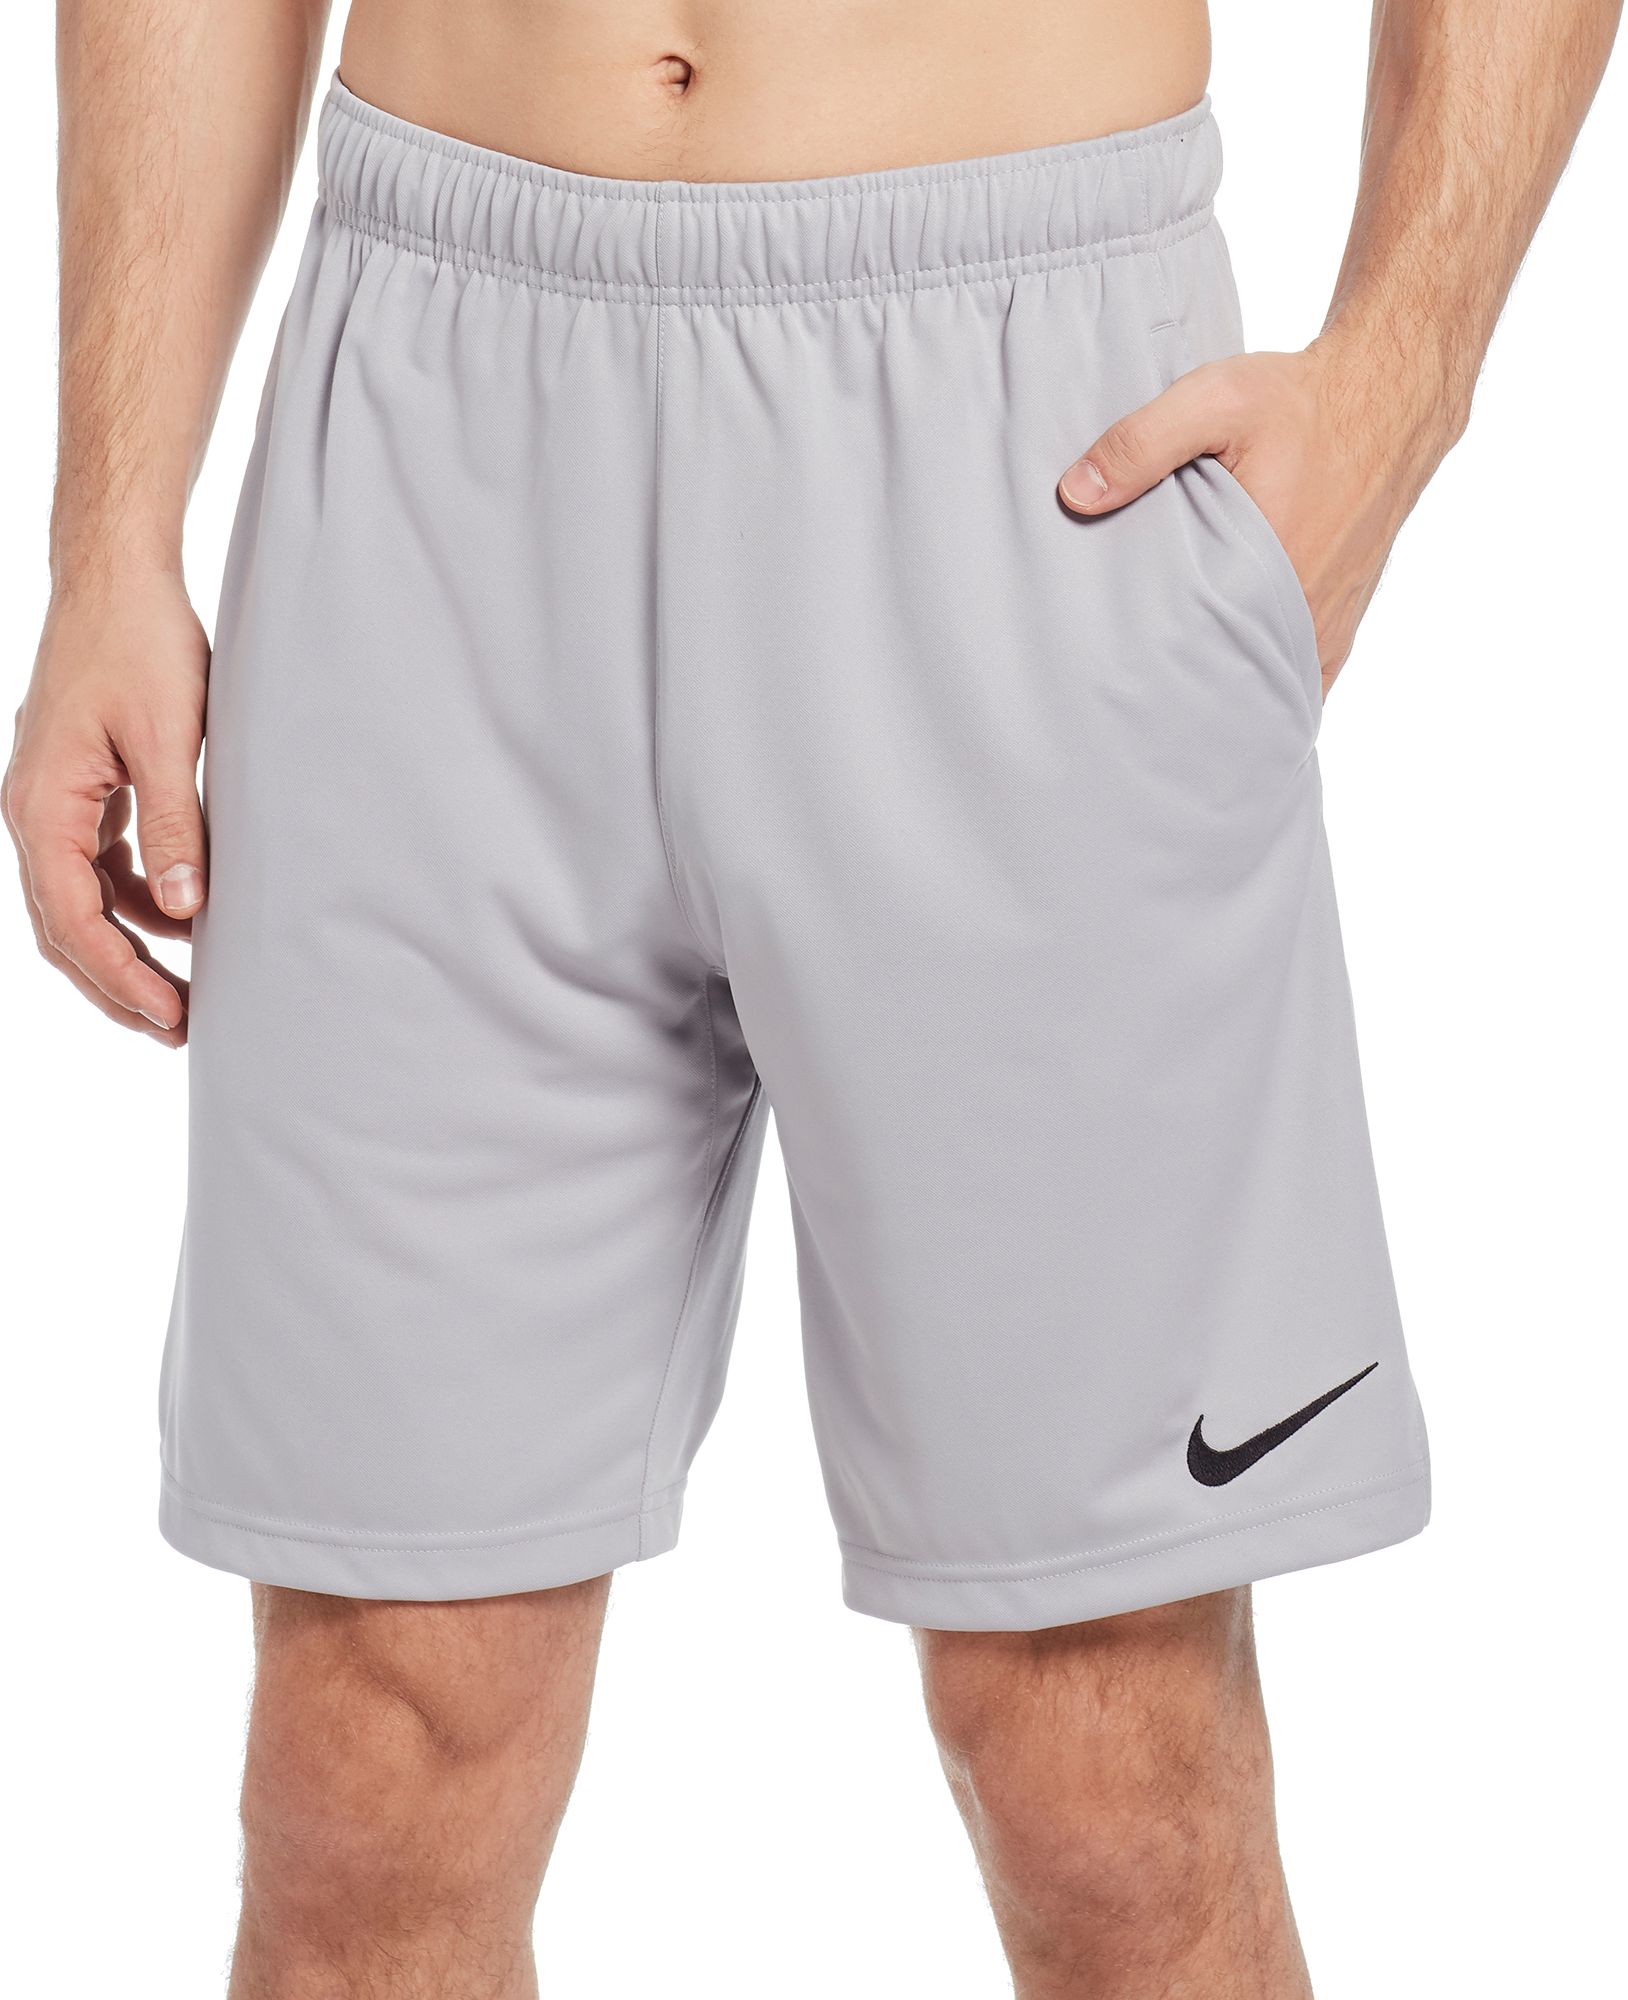 Nike Men's Dry Epic Training Shorts (Regular and Big & Tall) - .97 - .50